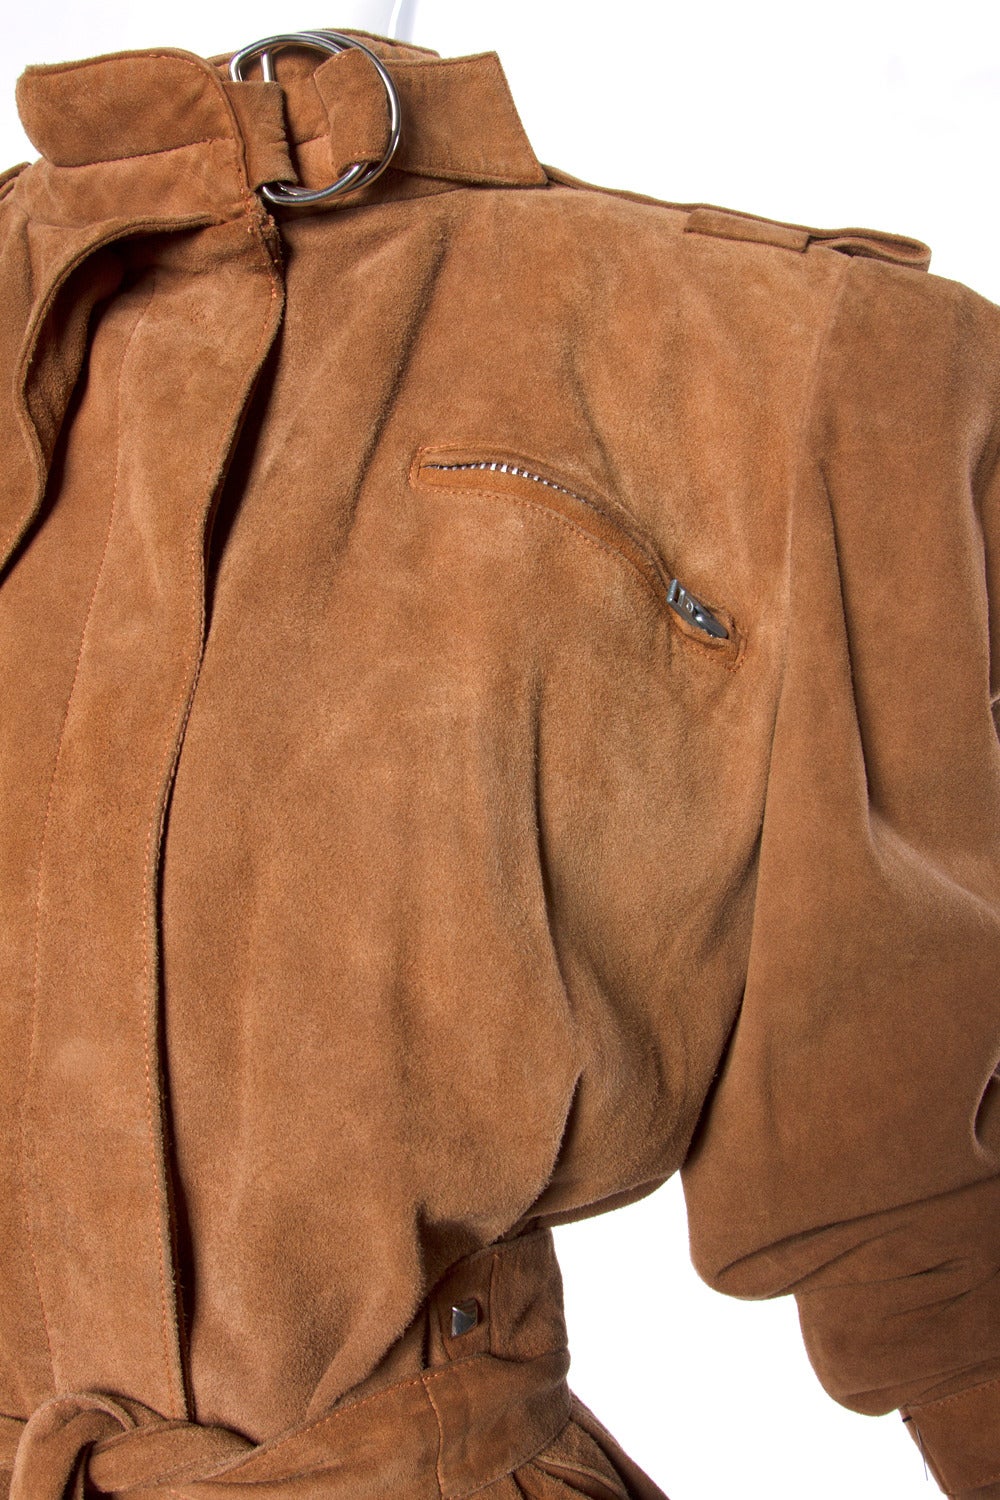 Women's Claude Montana pour Ideal Cuir Vintage 1980s 80s Brown Leather Jacket